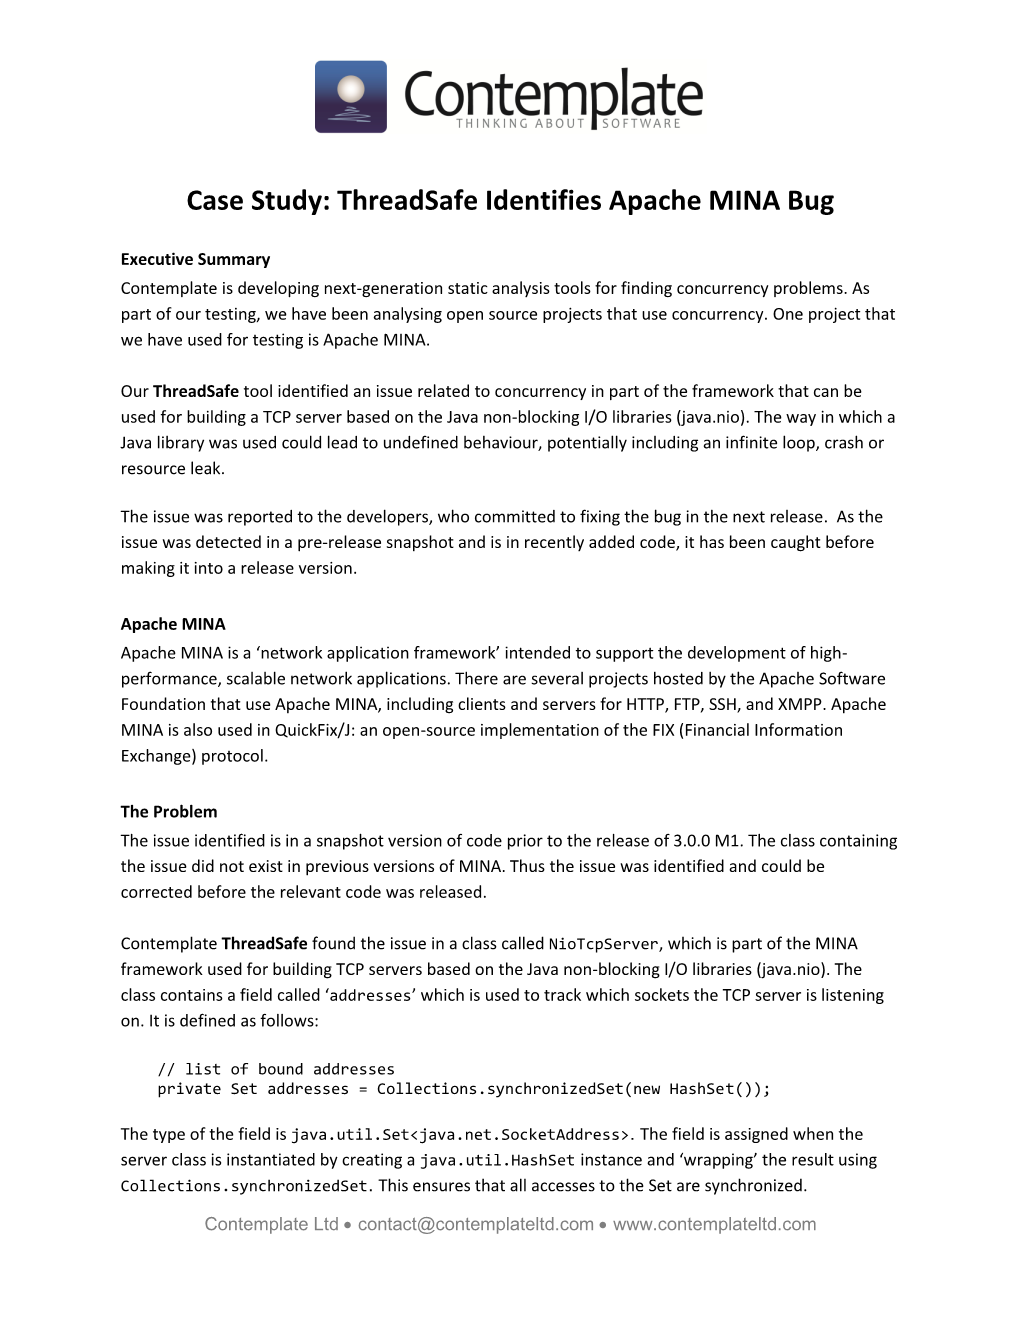 Apache Mina Case Study